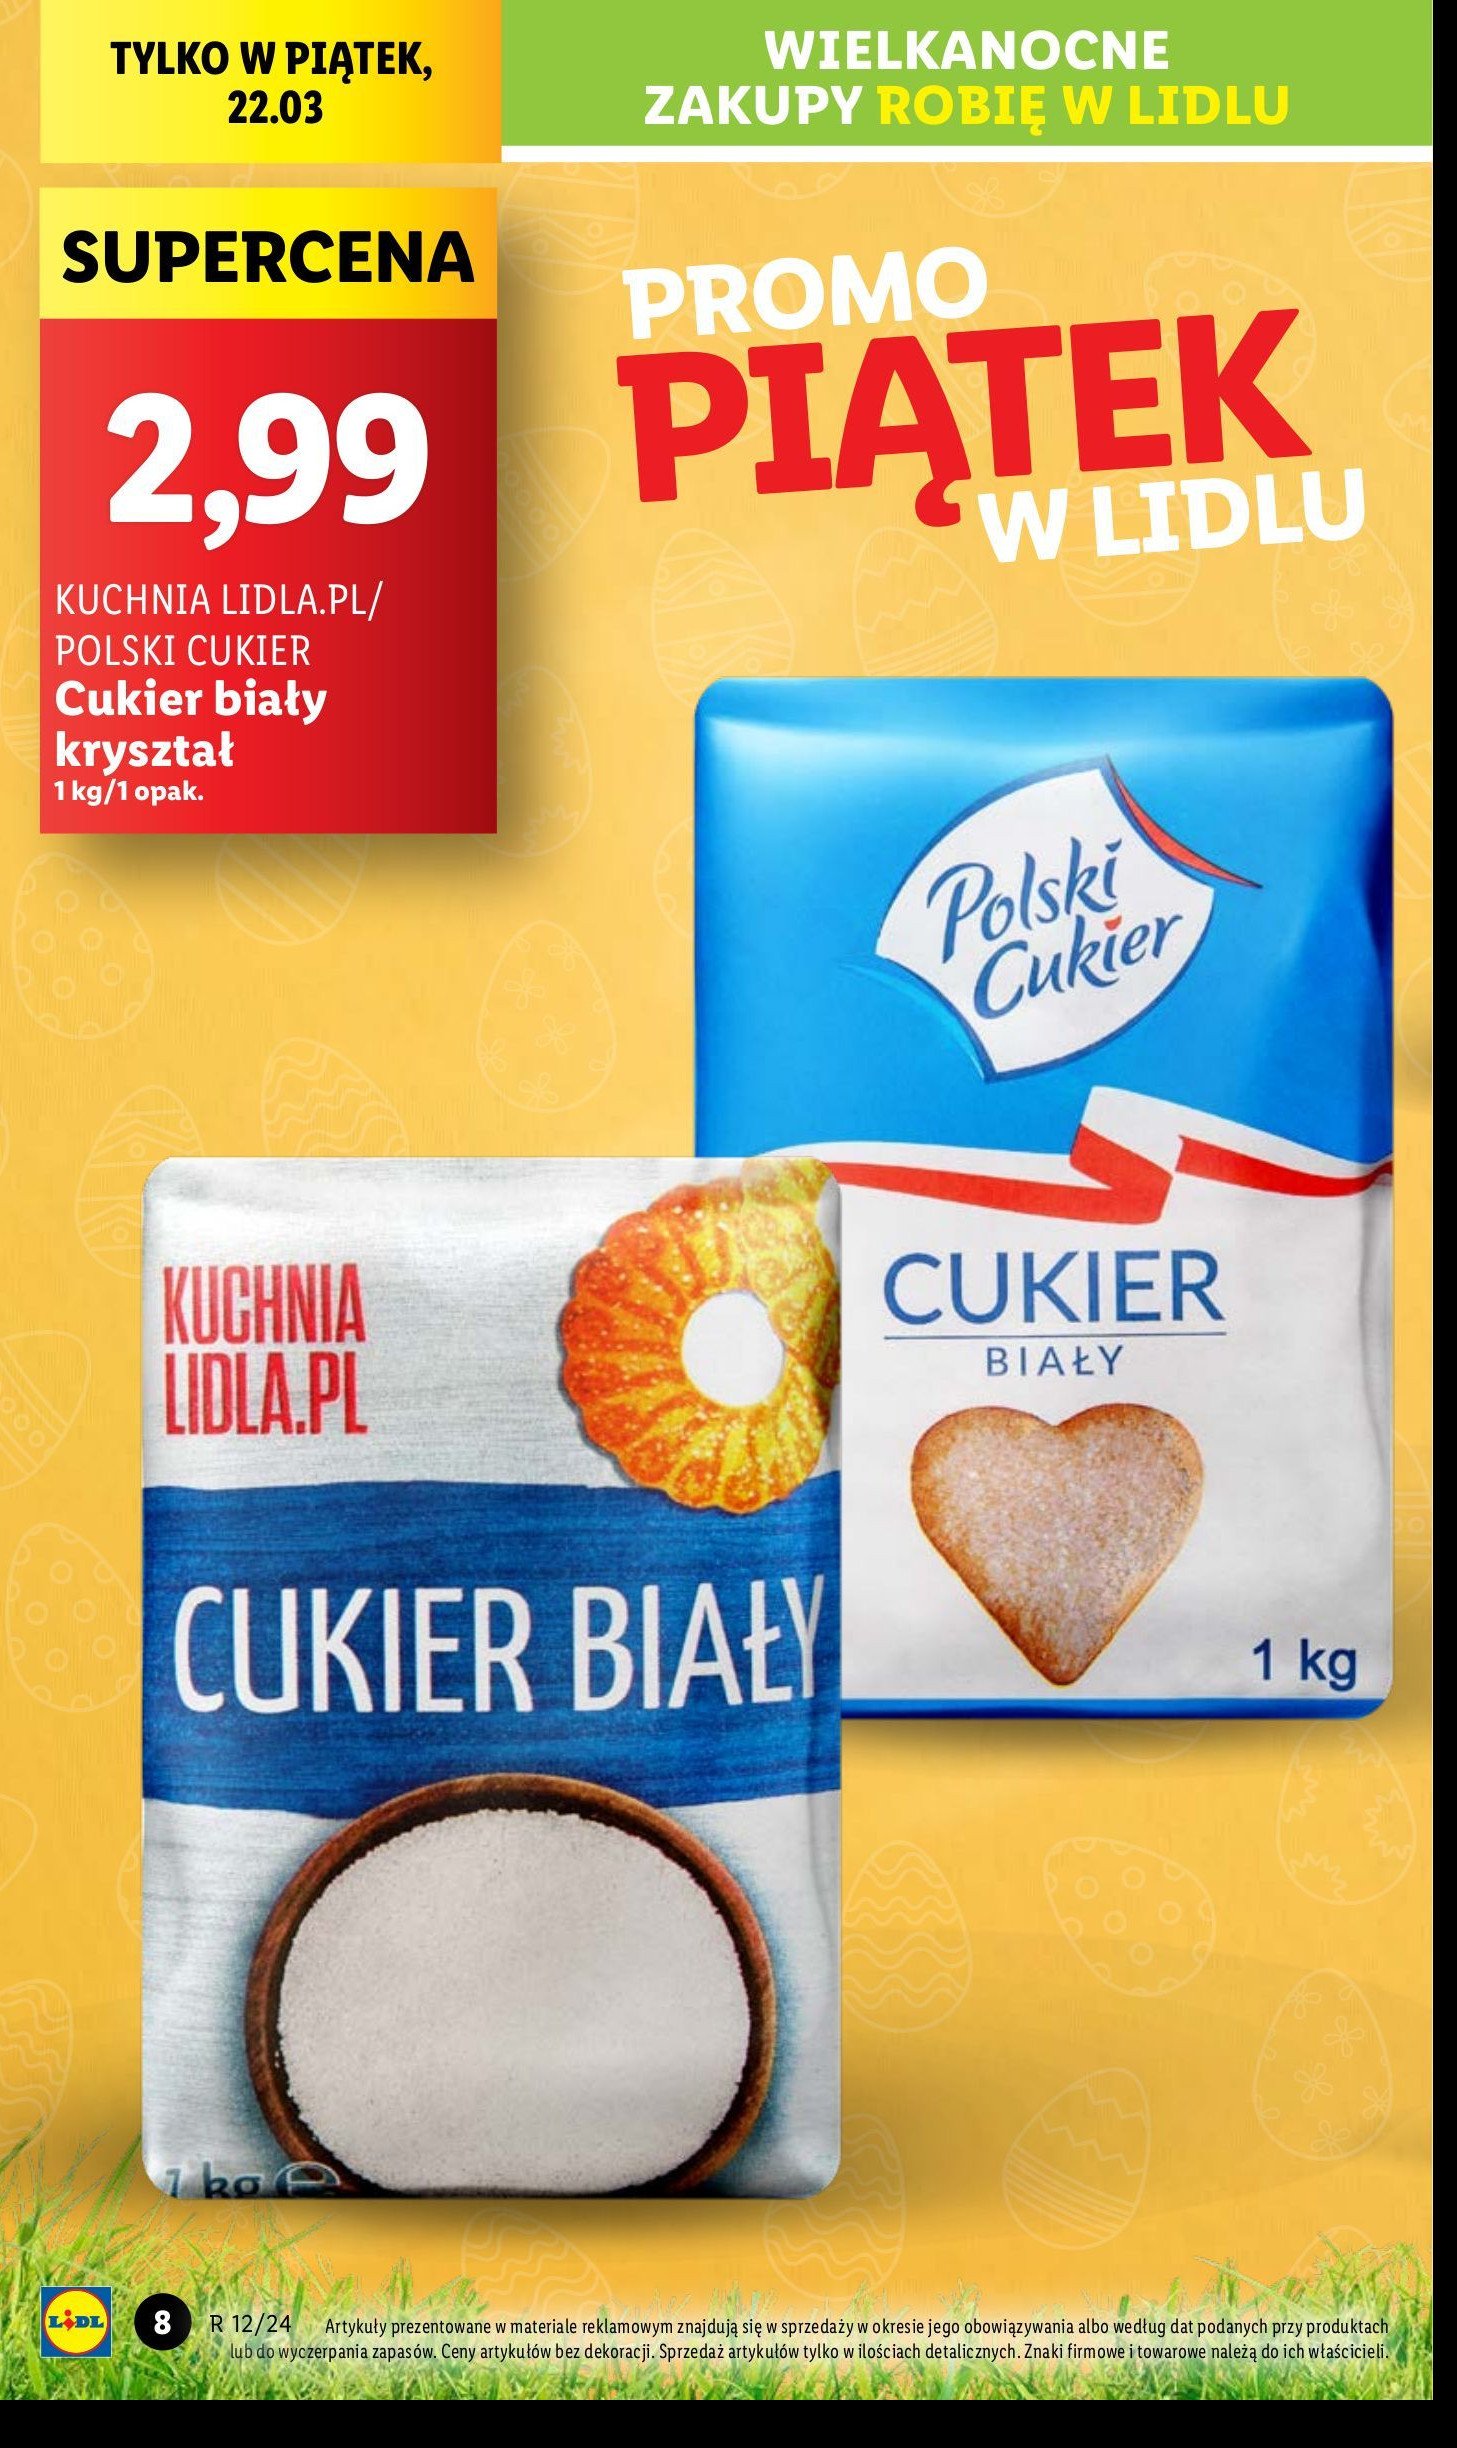 Cukier Kuchnia lidla.pl promocja